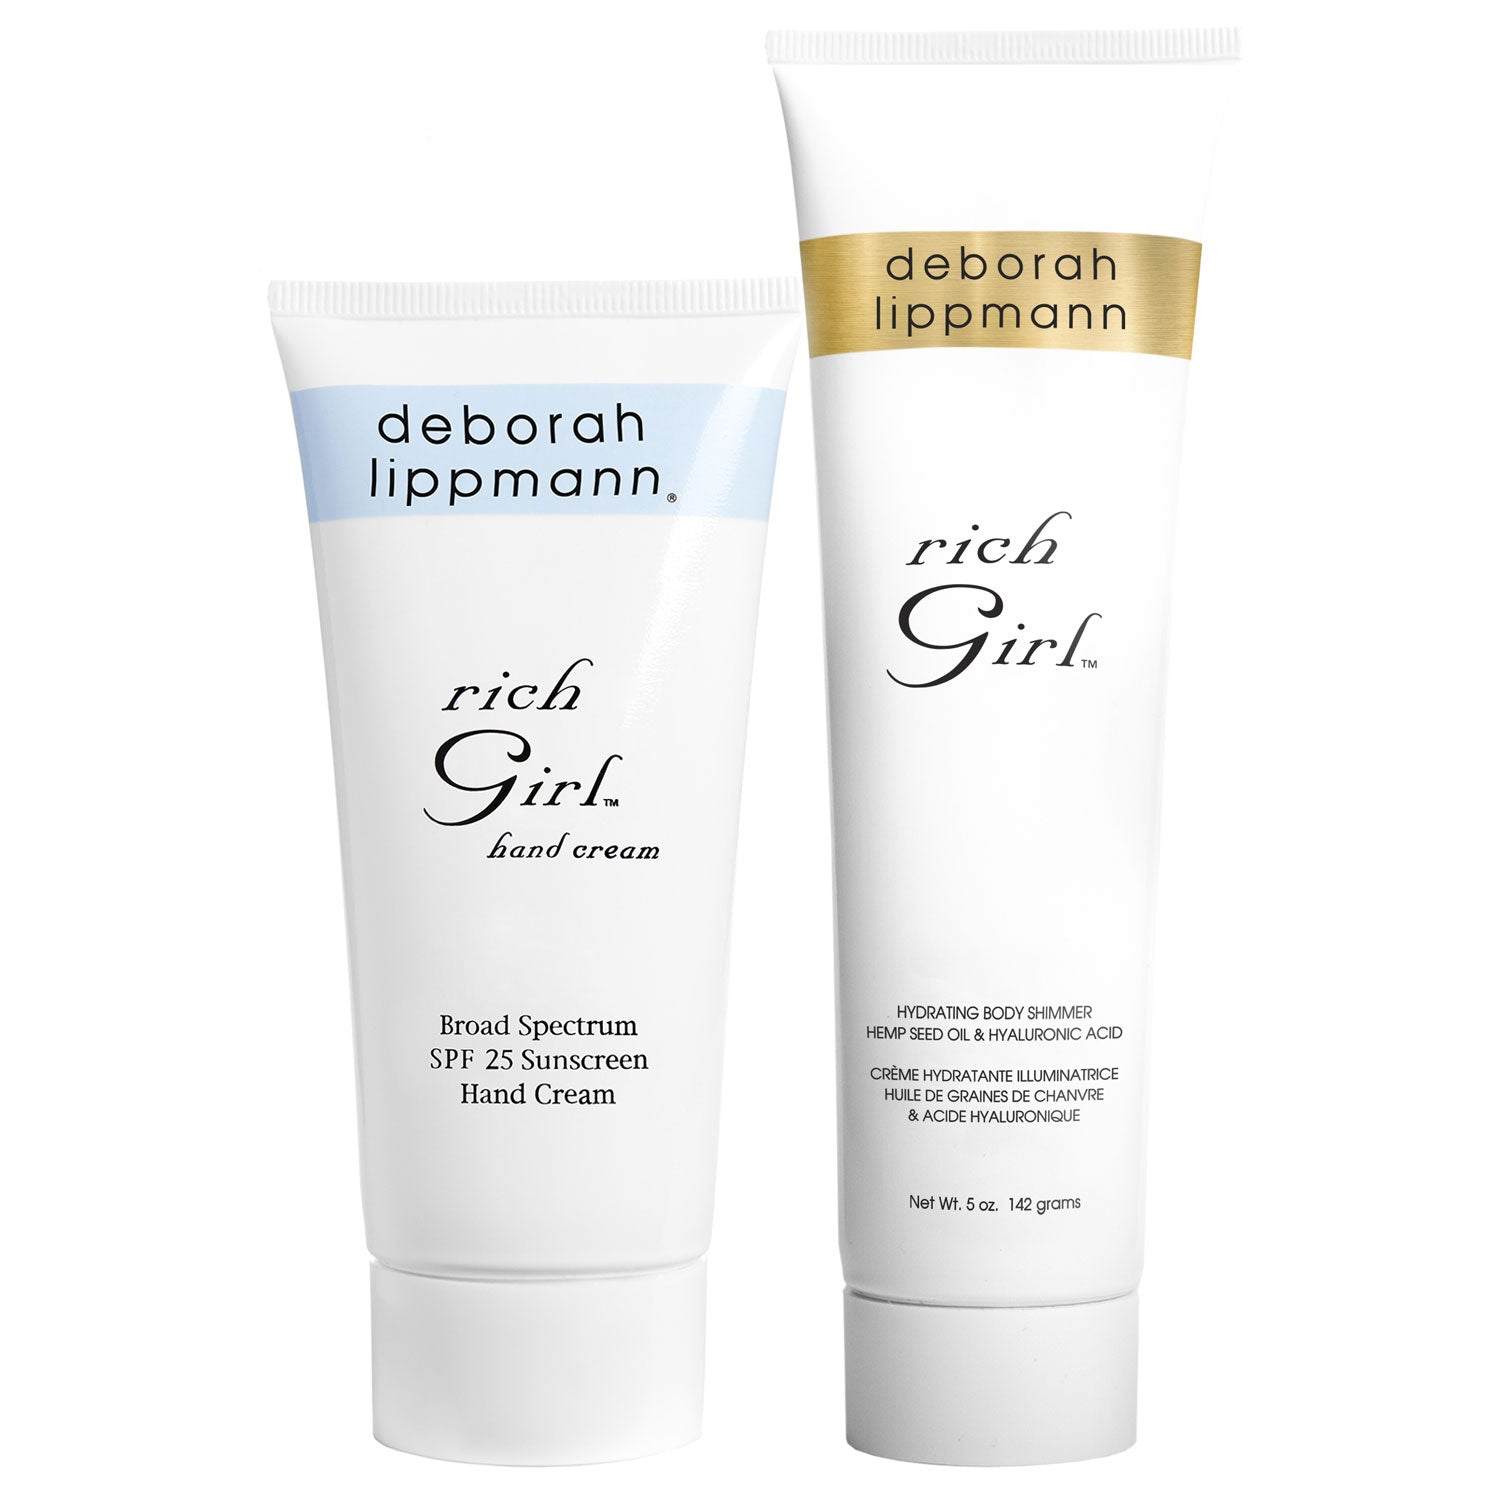 Rich Girl SPF Hand Cream and Body Shimmer